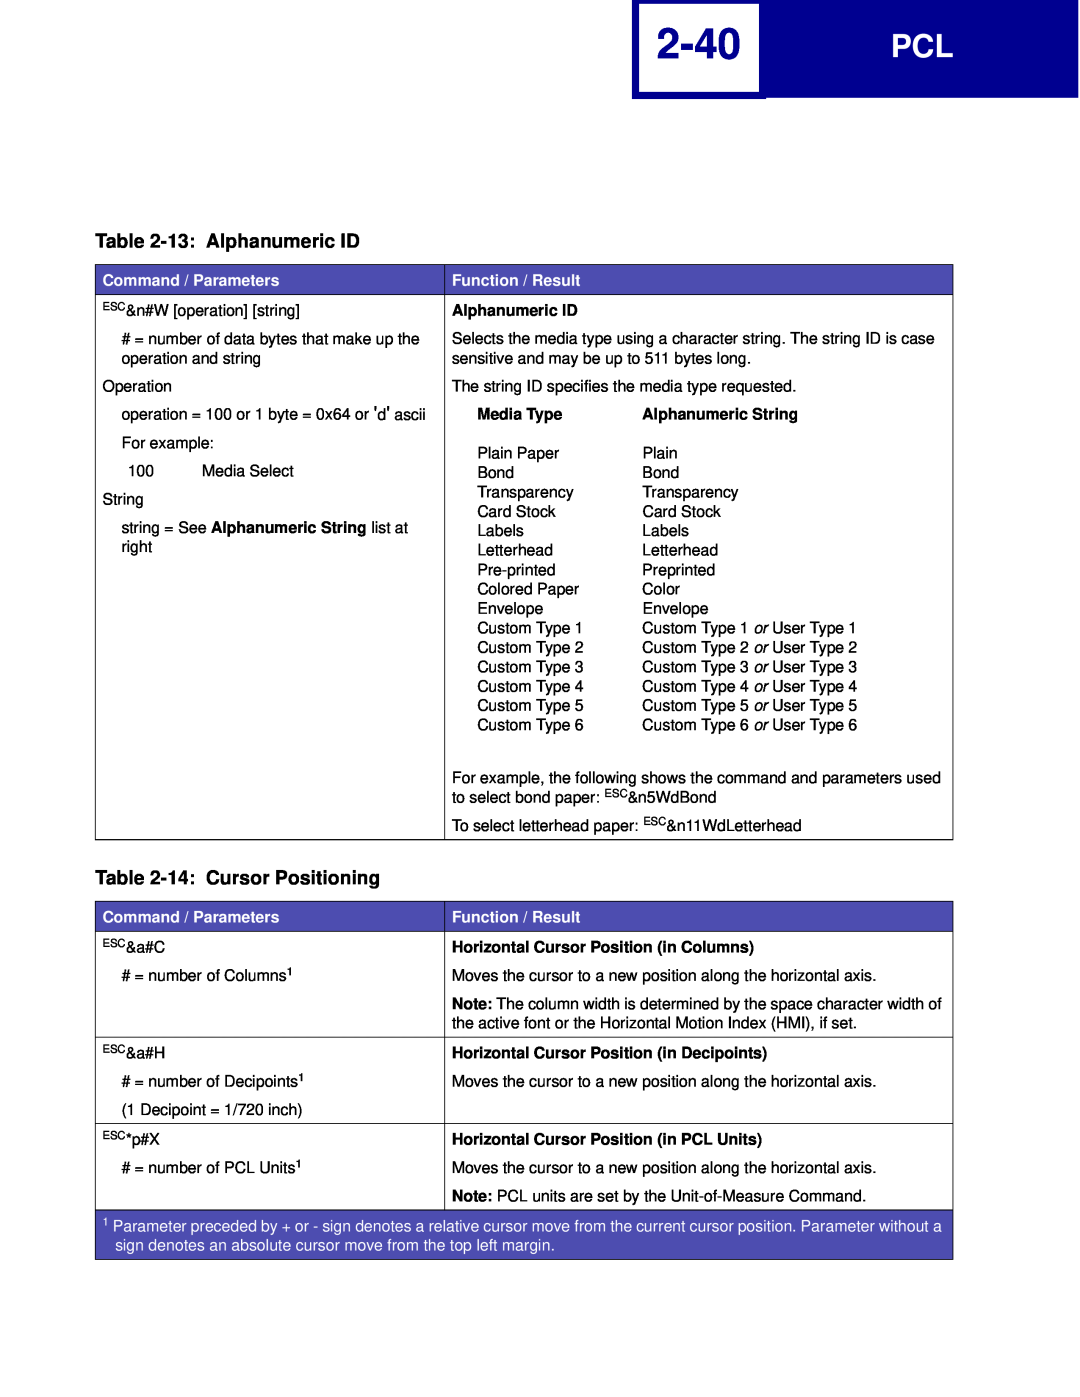 Lexmark C760, C762 manual 2-40, 13 Alphanumeric ID, 14 Cursor Positioning, Media Type, Alphanumeric String 